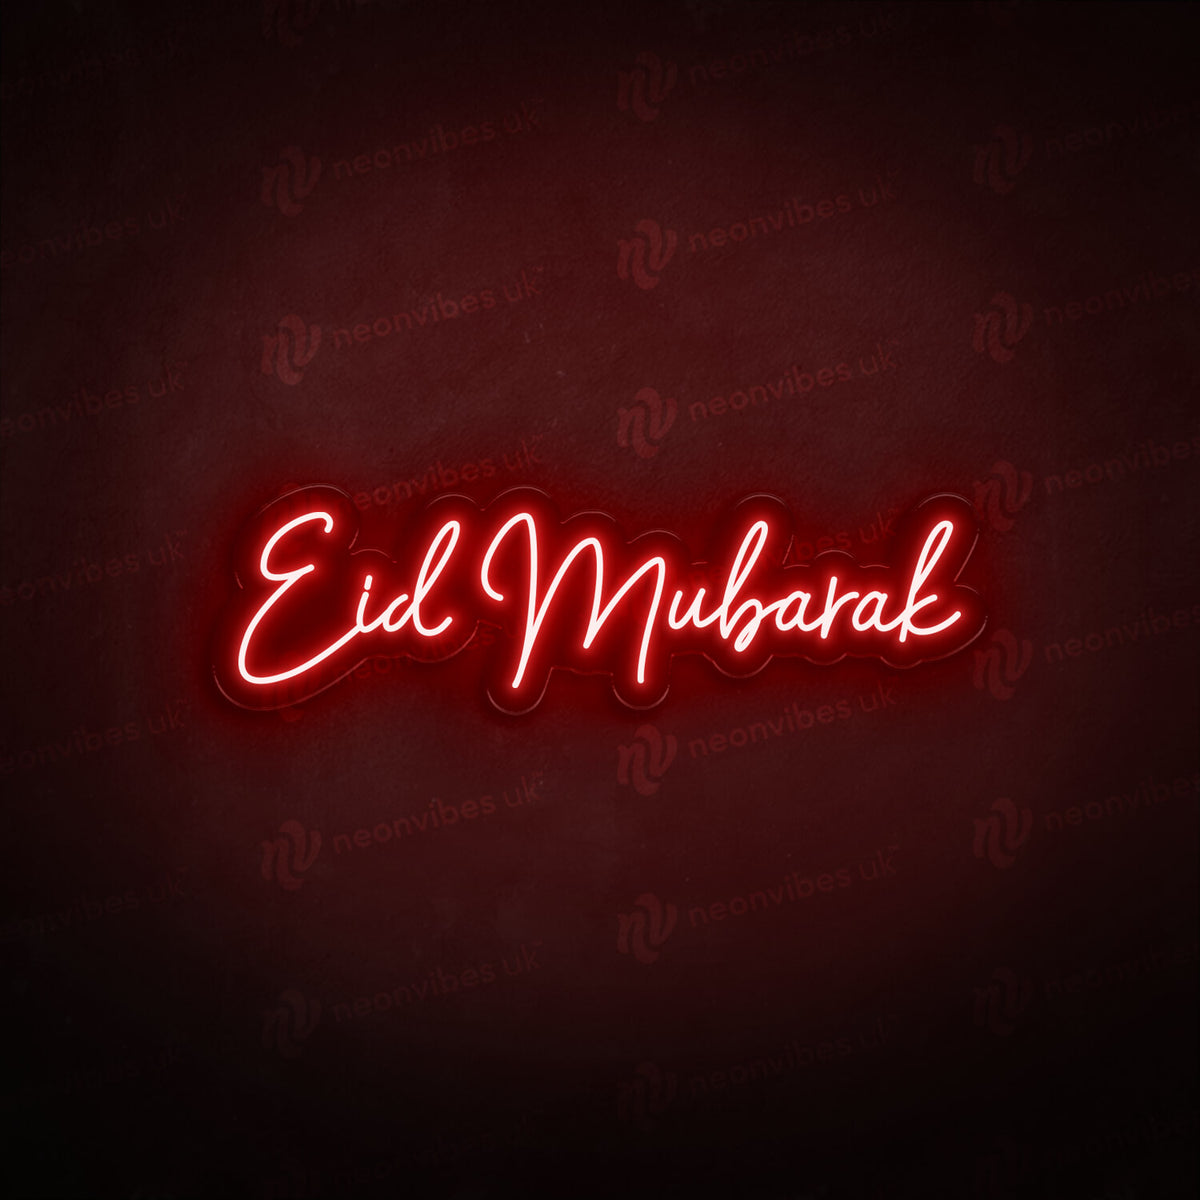 Eid Mubarak neon sign